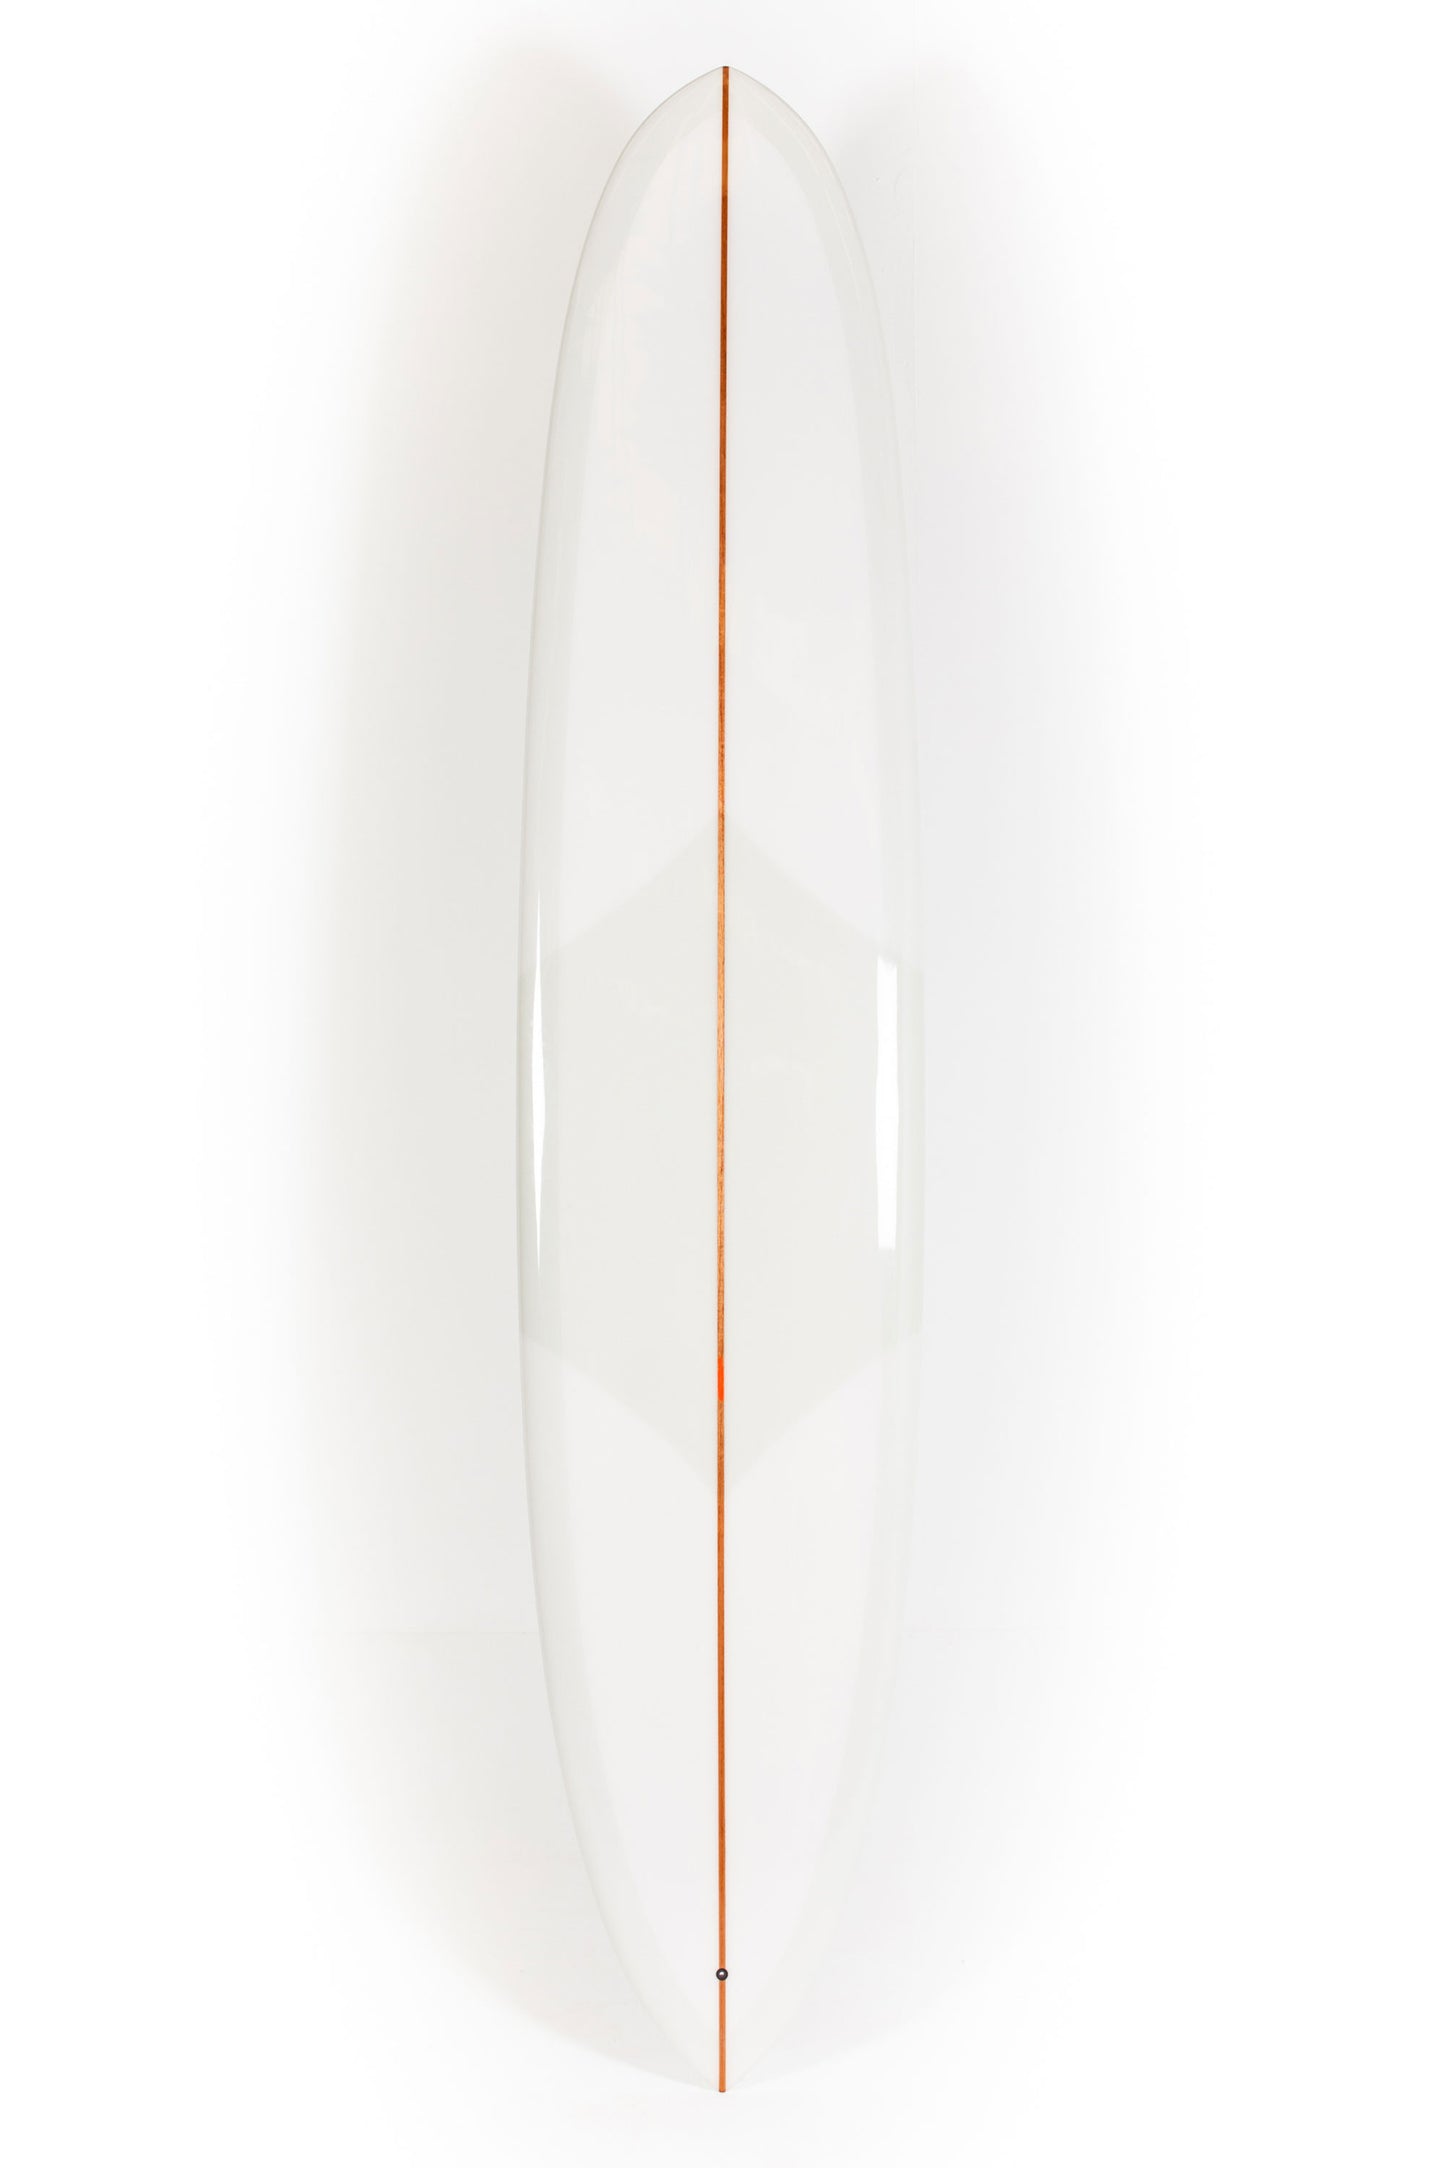 Pukas Surf Shop - Christenson Surfboard  - THE CLIFF PINTAIL by Chris Christenson - 9'6” x 23 1/4 x 2 7/8 - CX05339